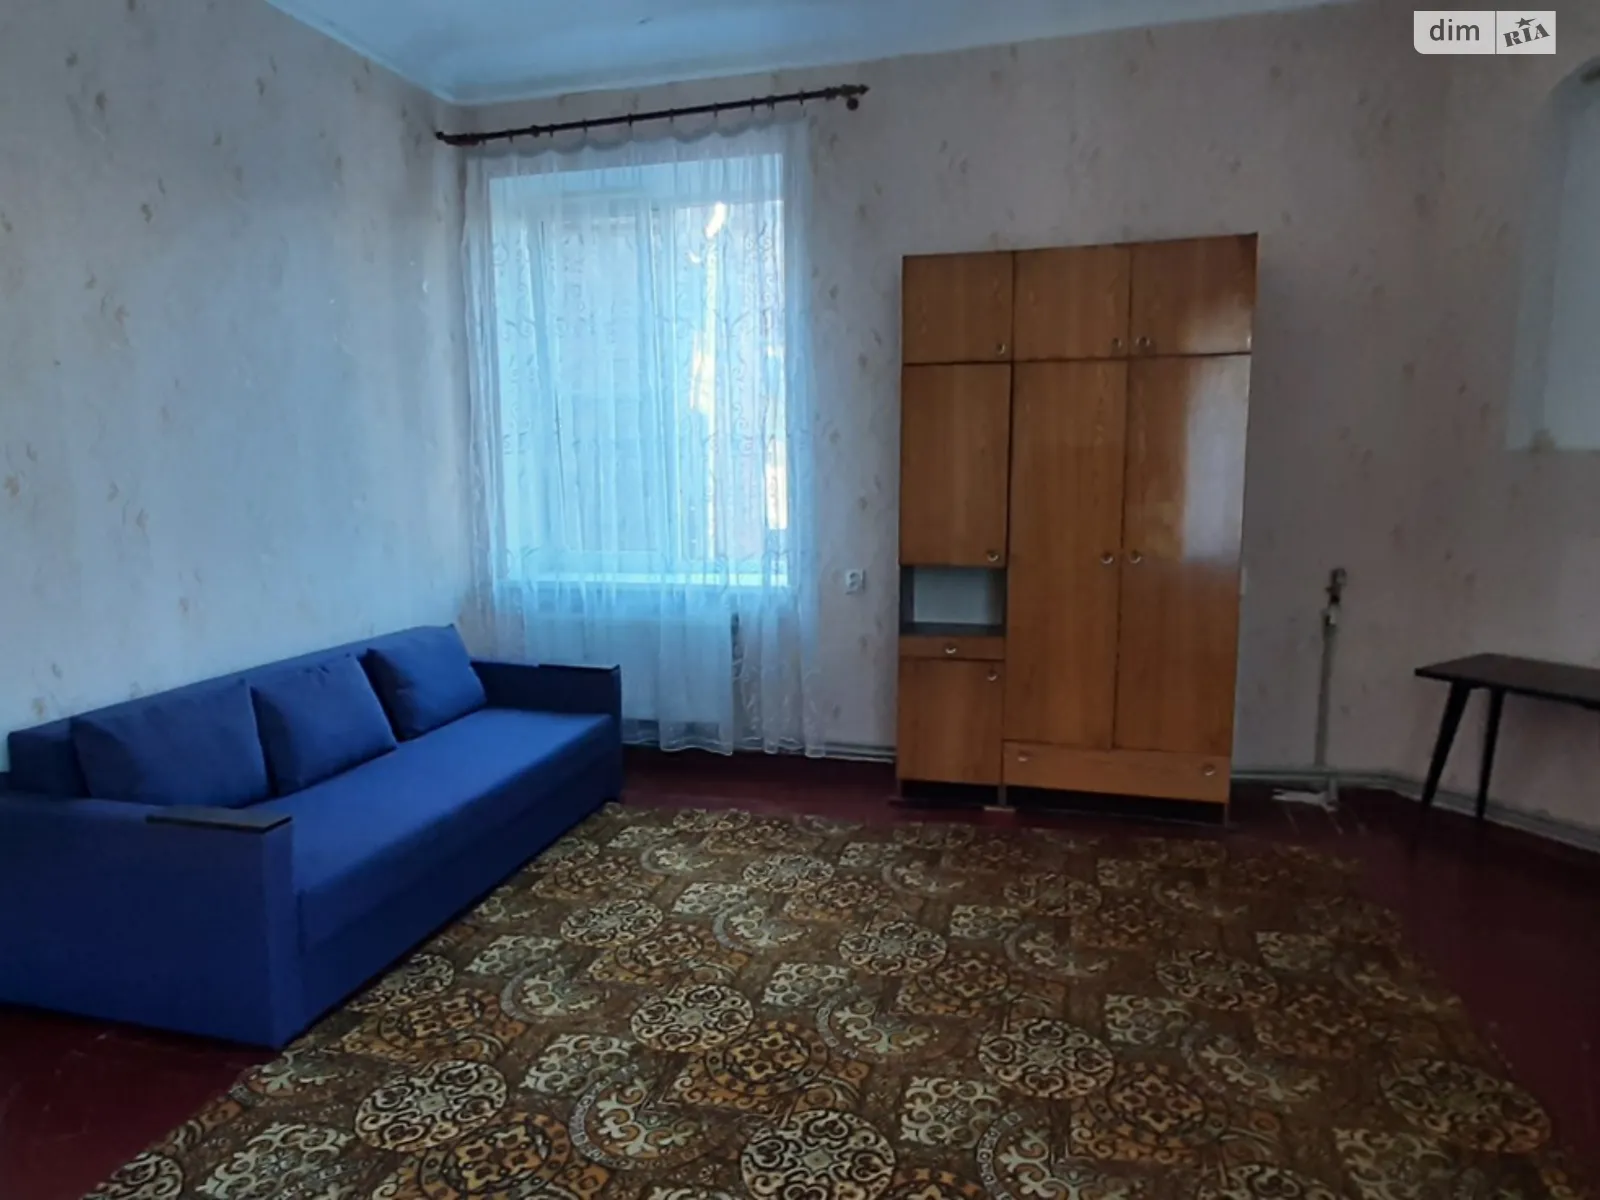 Сдается в аренду комната 35 кв. м в Харькове, цена: 1700 грн